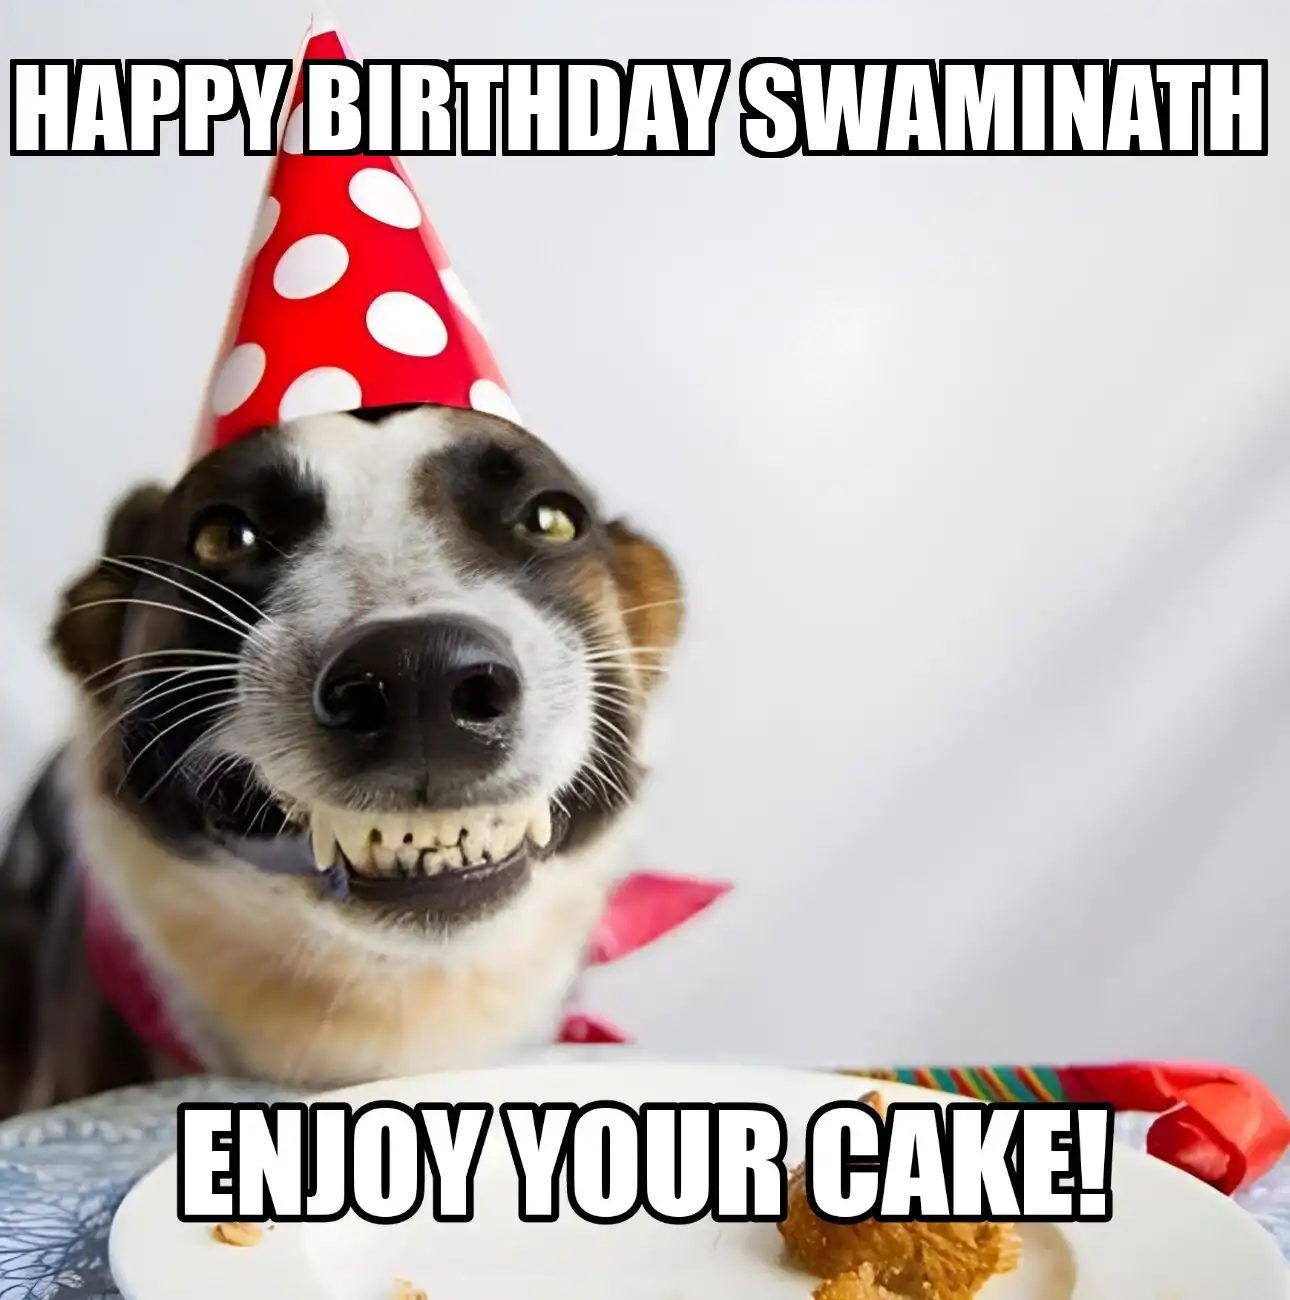 Happy Birthday Swaminath Enjoy Your Cake Dog Meme